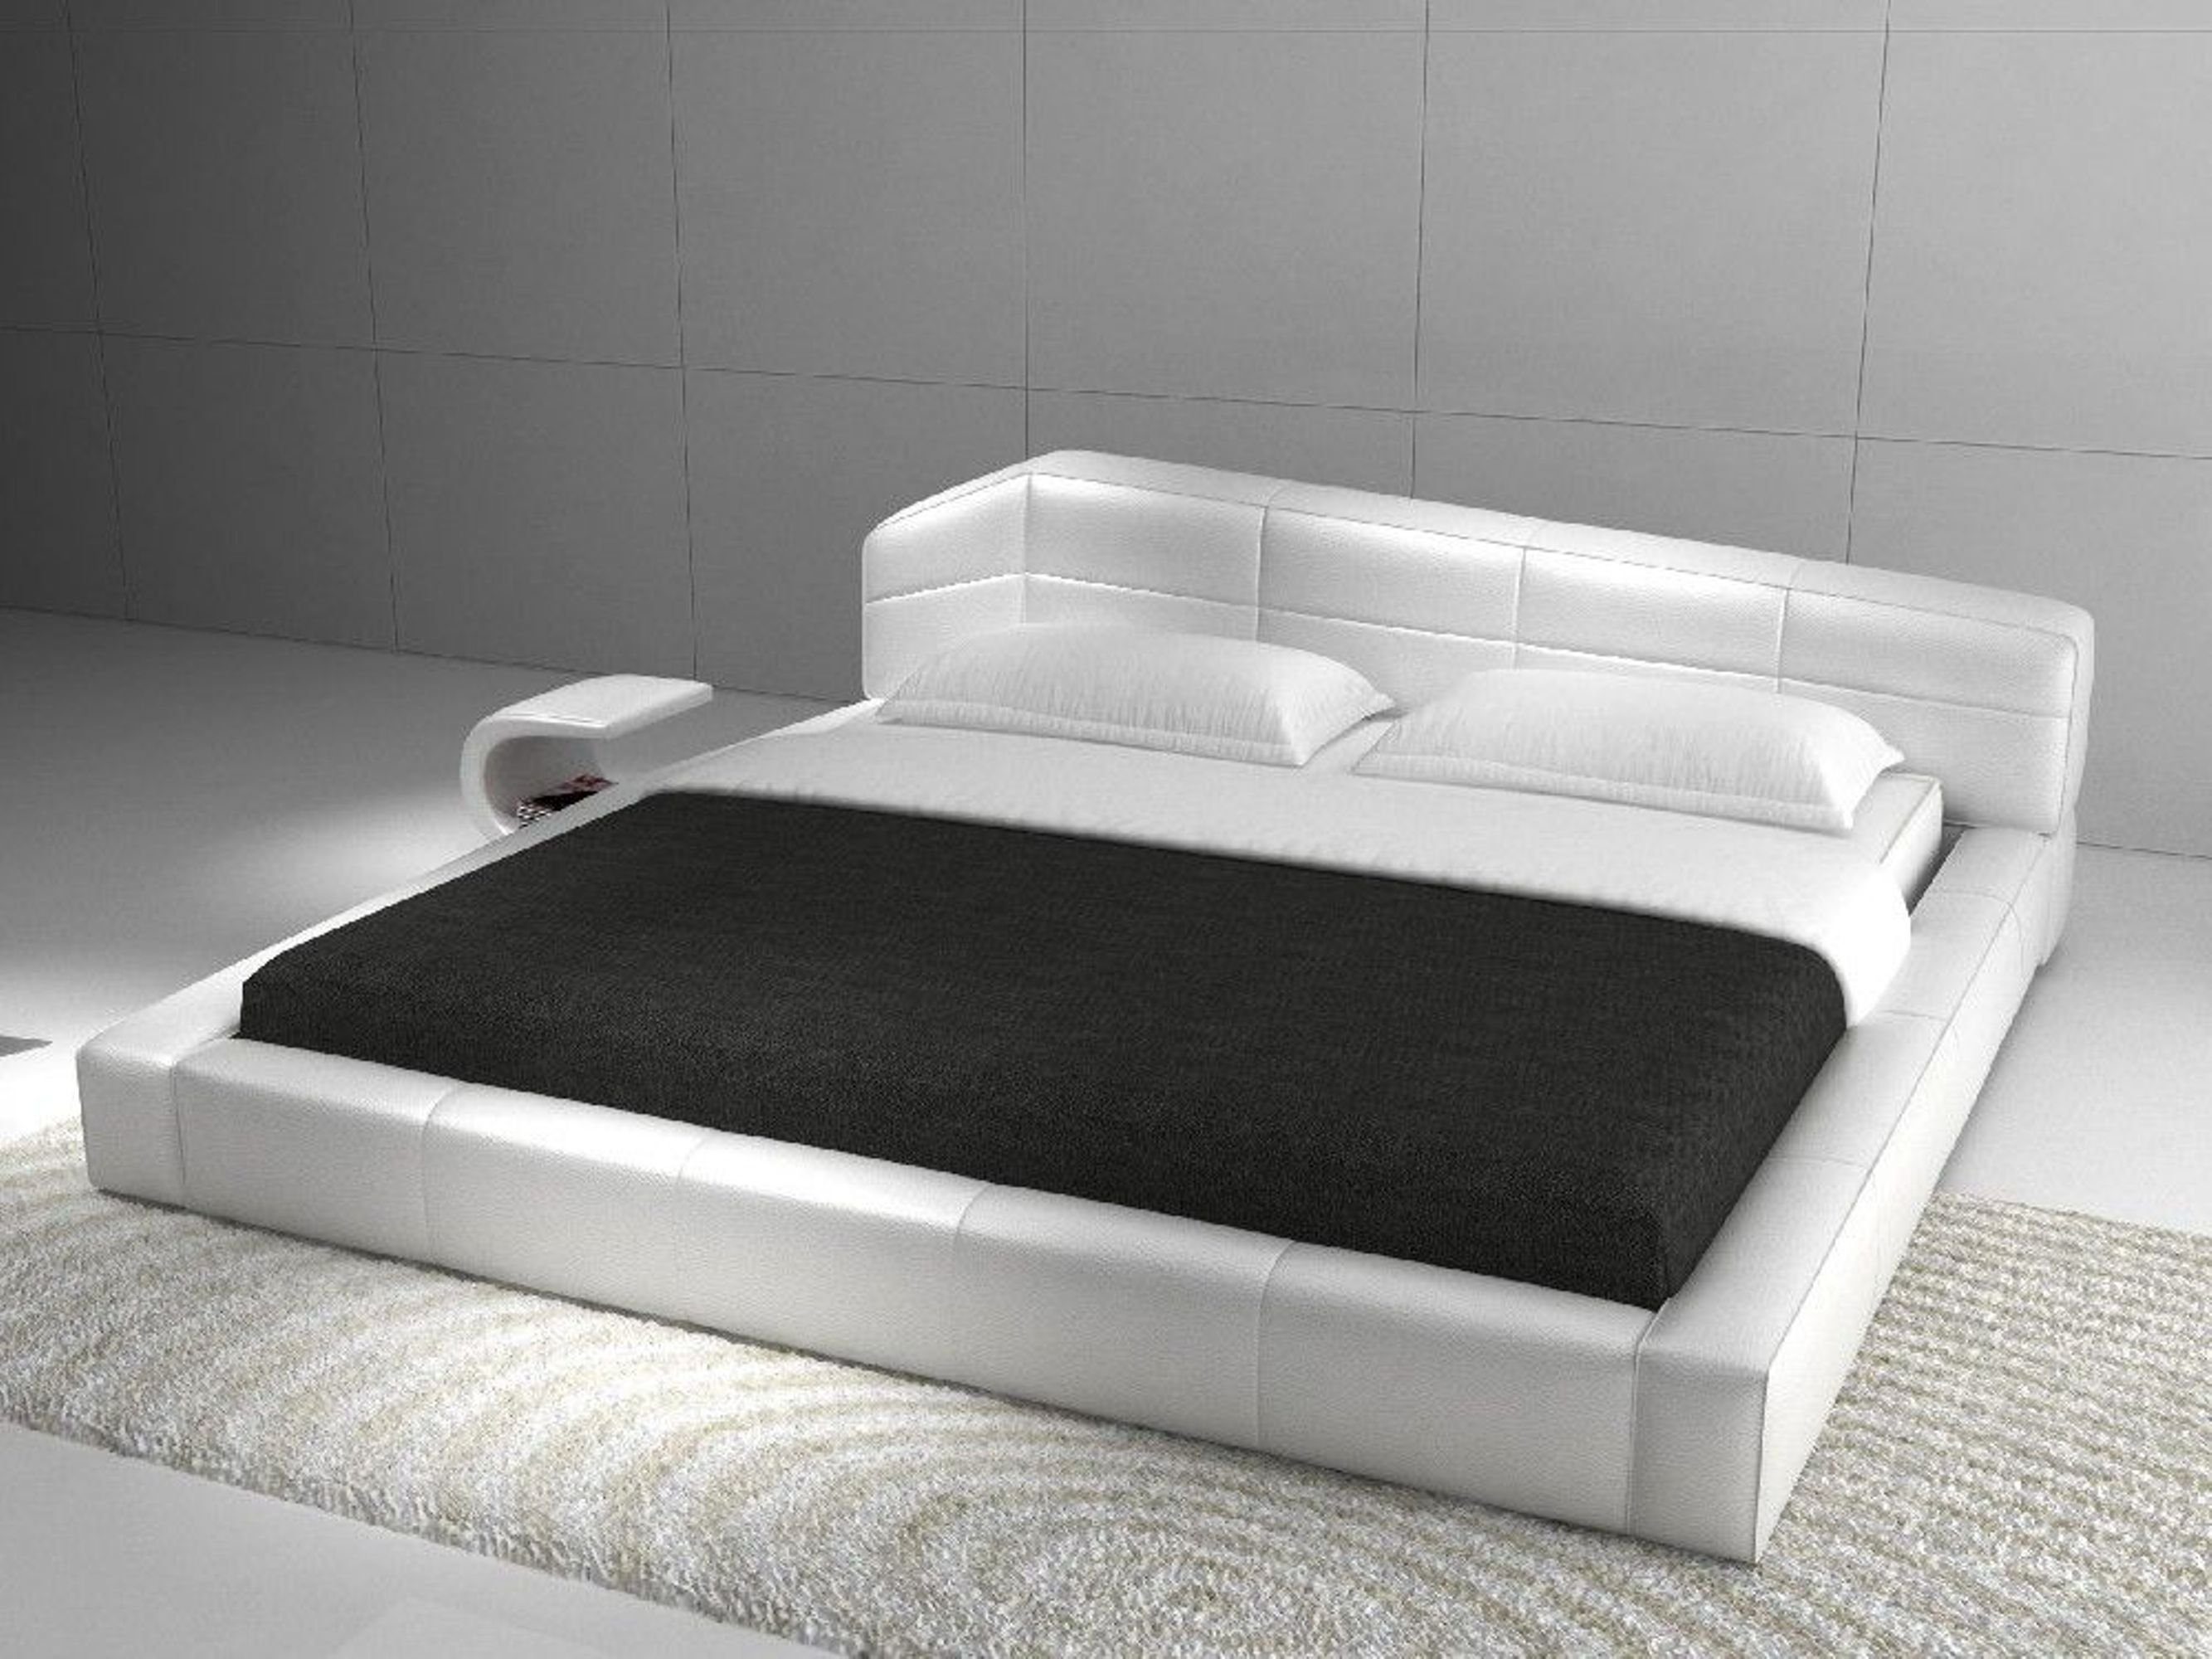 Modernes Zimmer Hotel Bett Gestell Schlaf Bett JVmoebel Luxus Design Leder